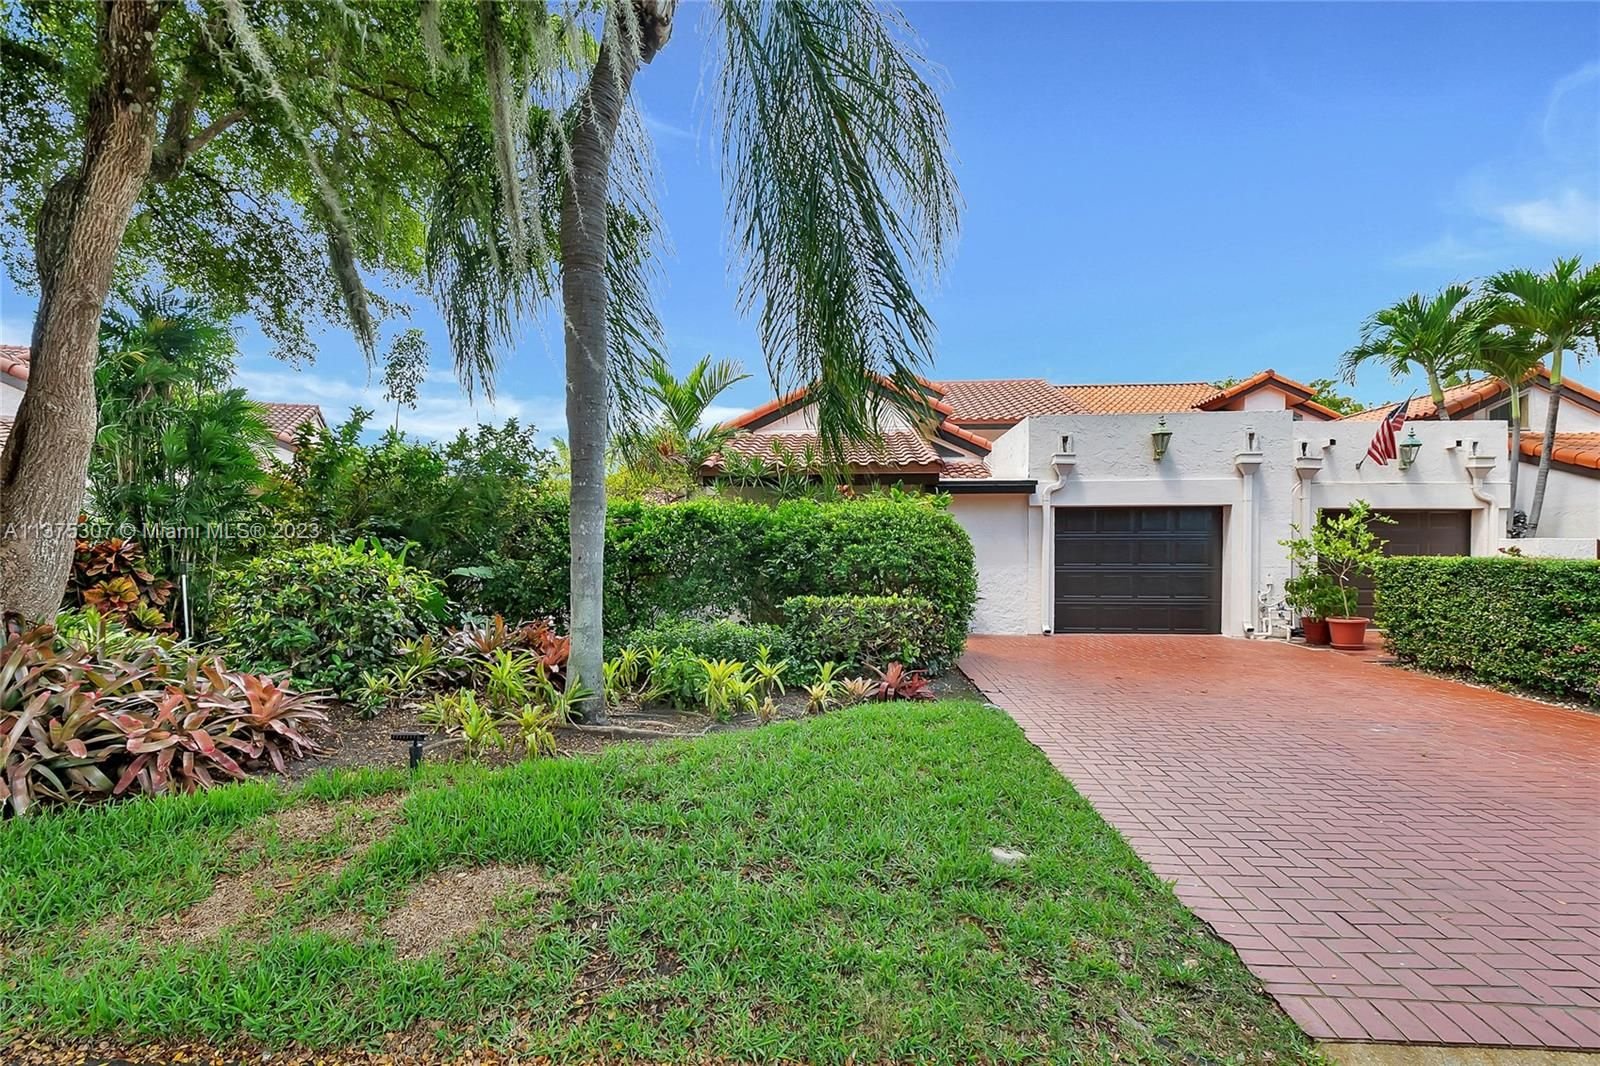 Real estate property located at 8880 78th Pl, Miami-Dade County, Miami, FL